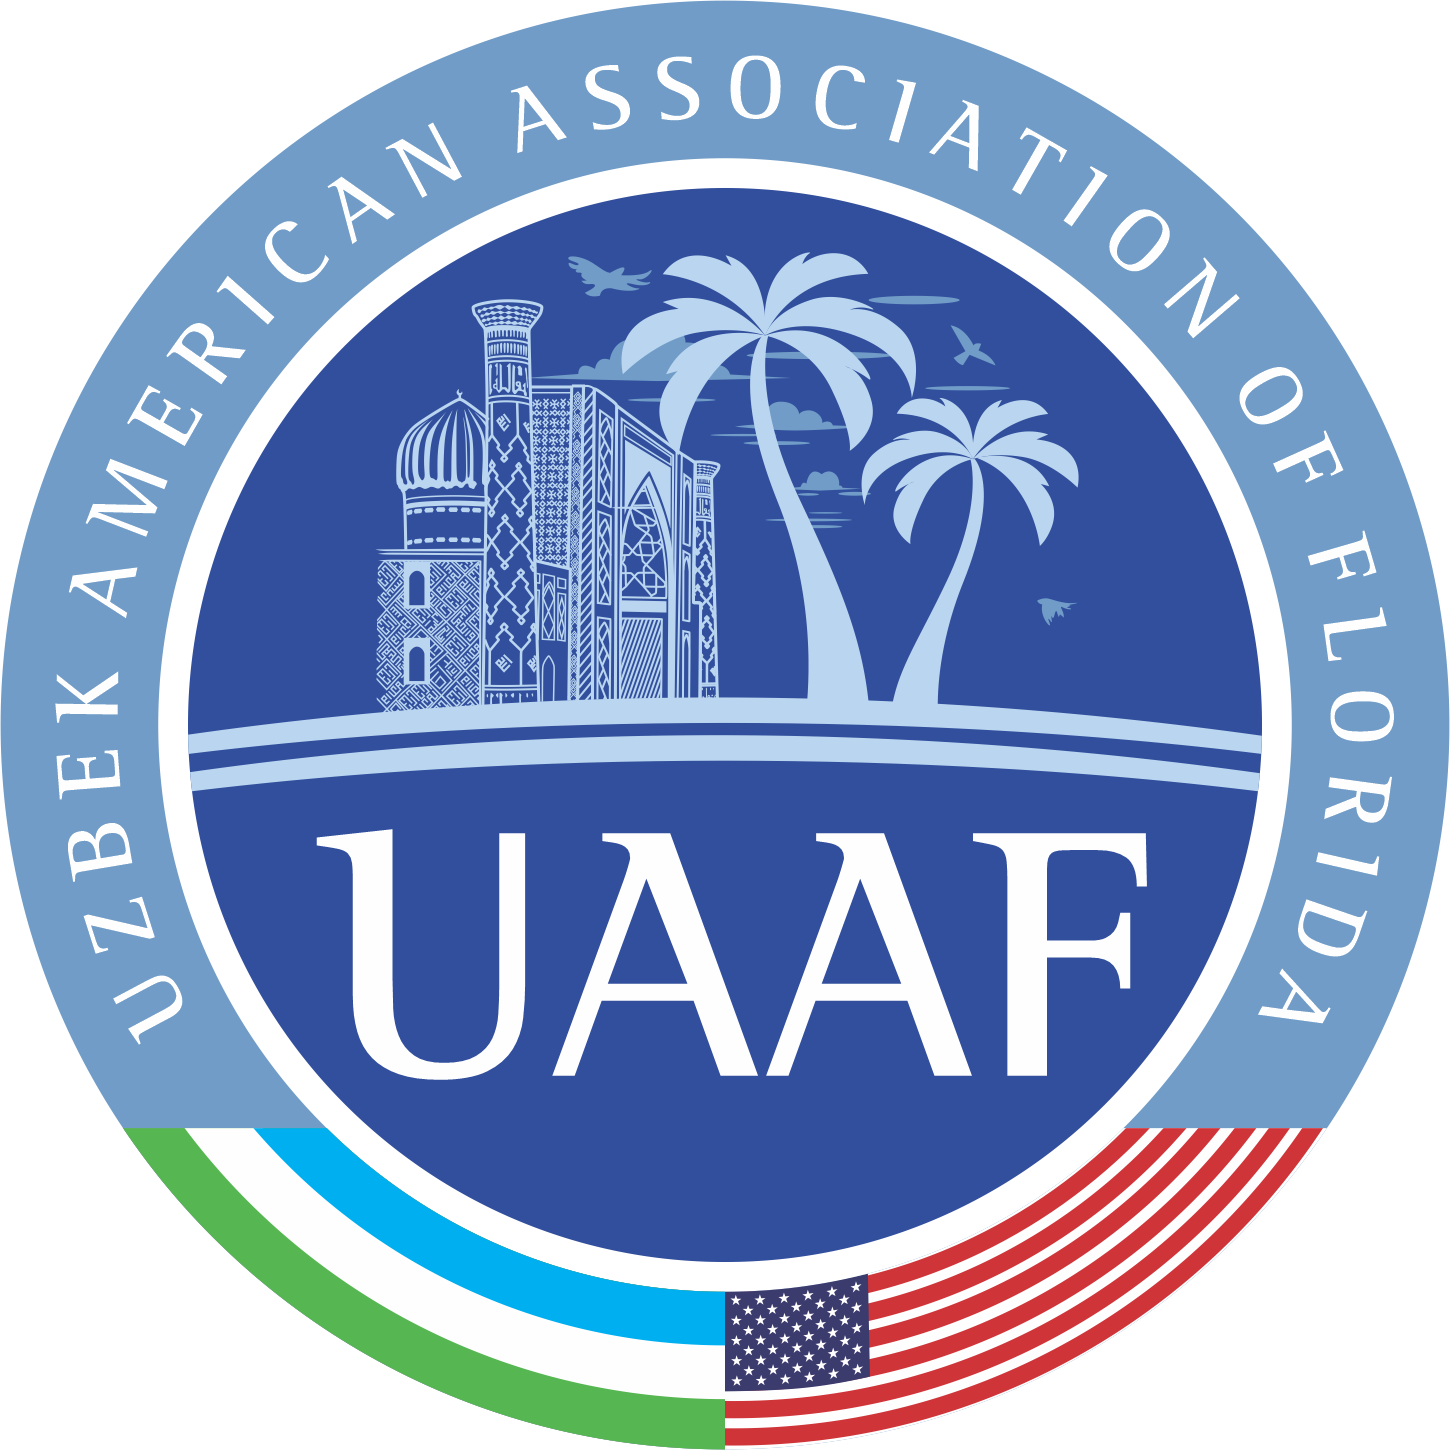 Uzbek American Association of Florida - Uzbek organization in Kissimmee FL